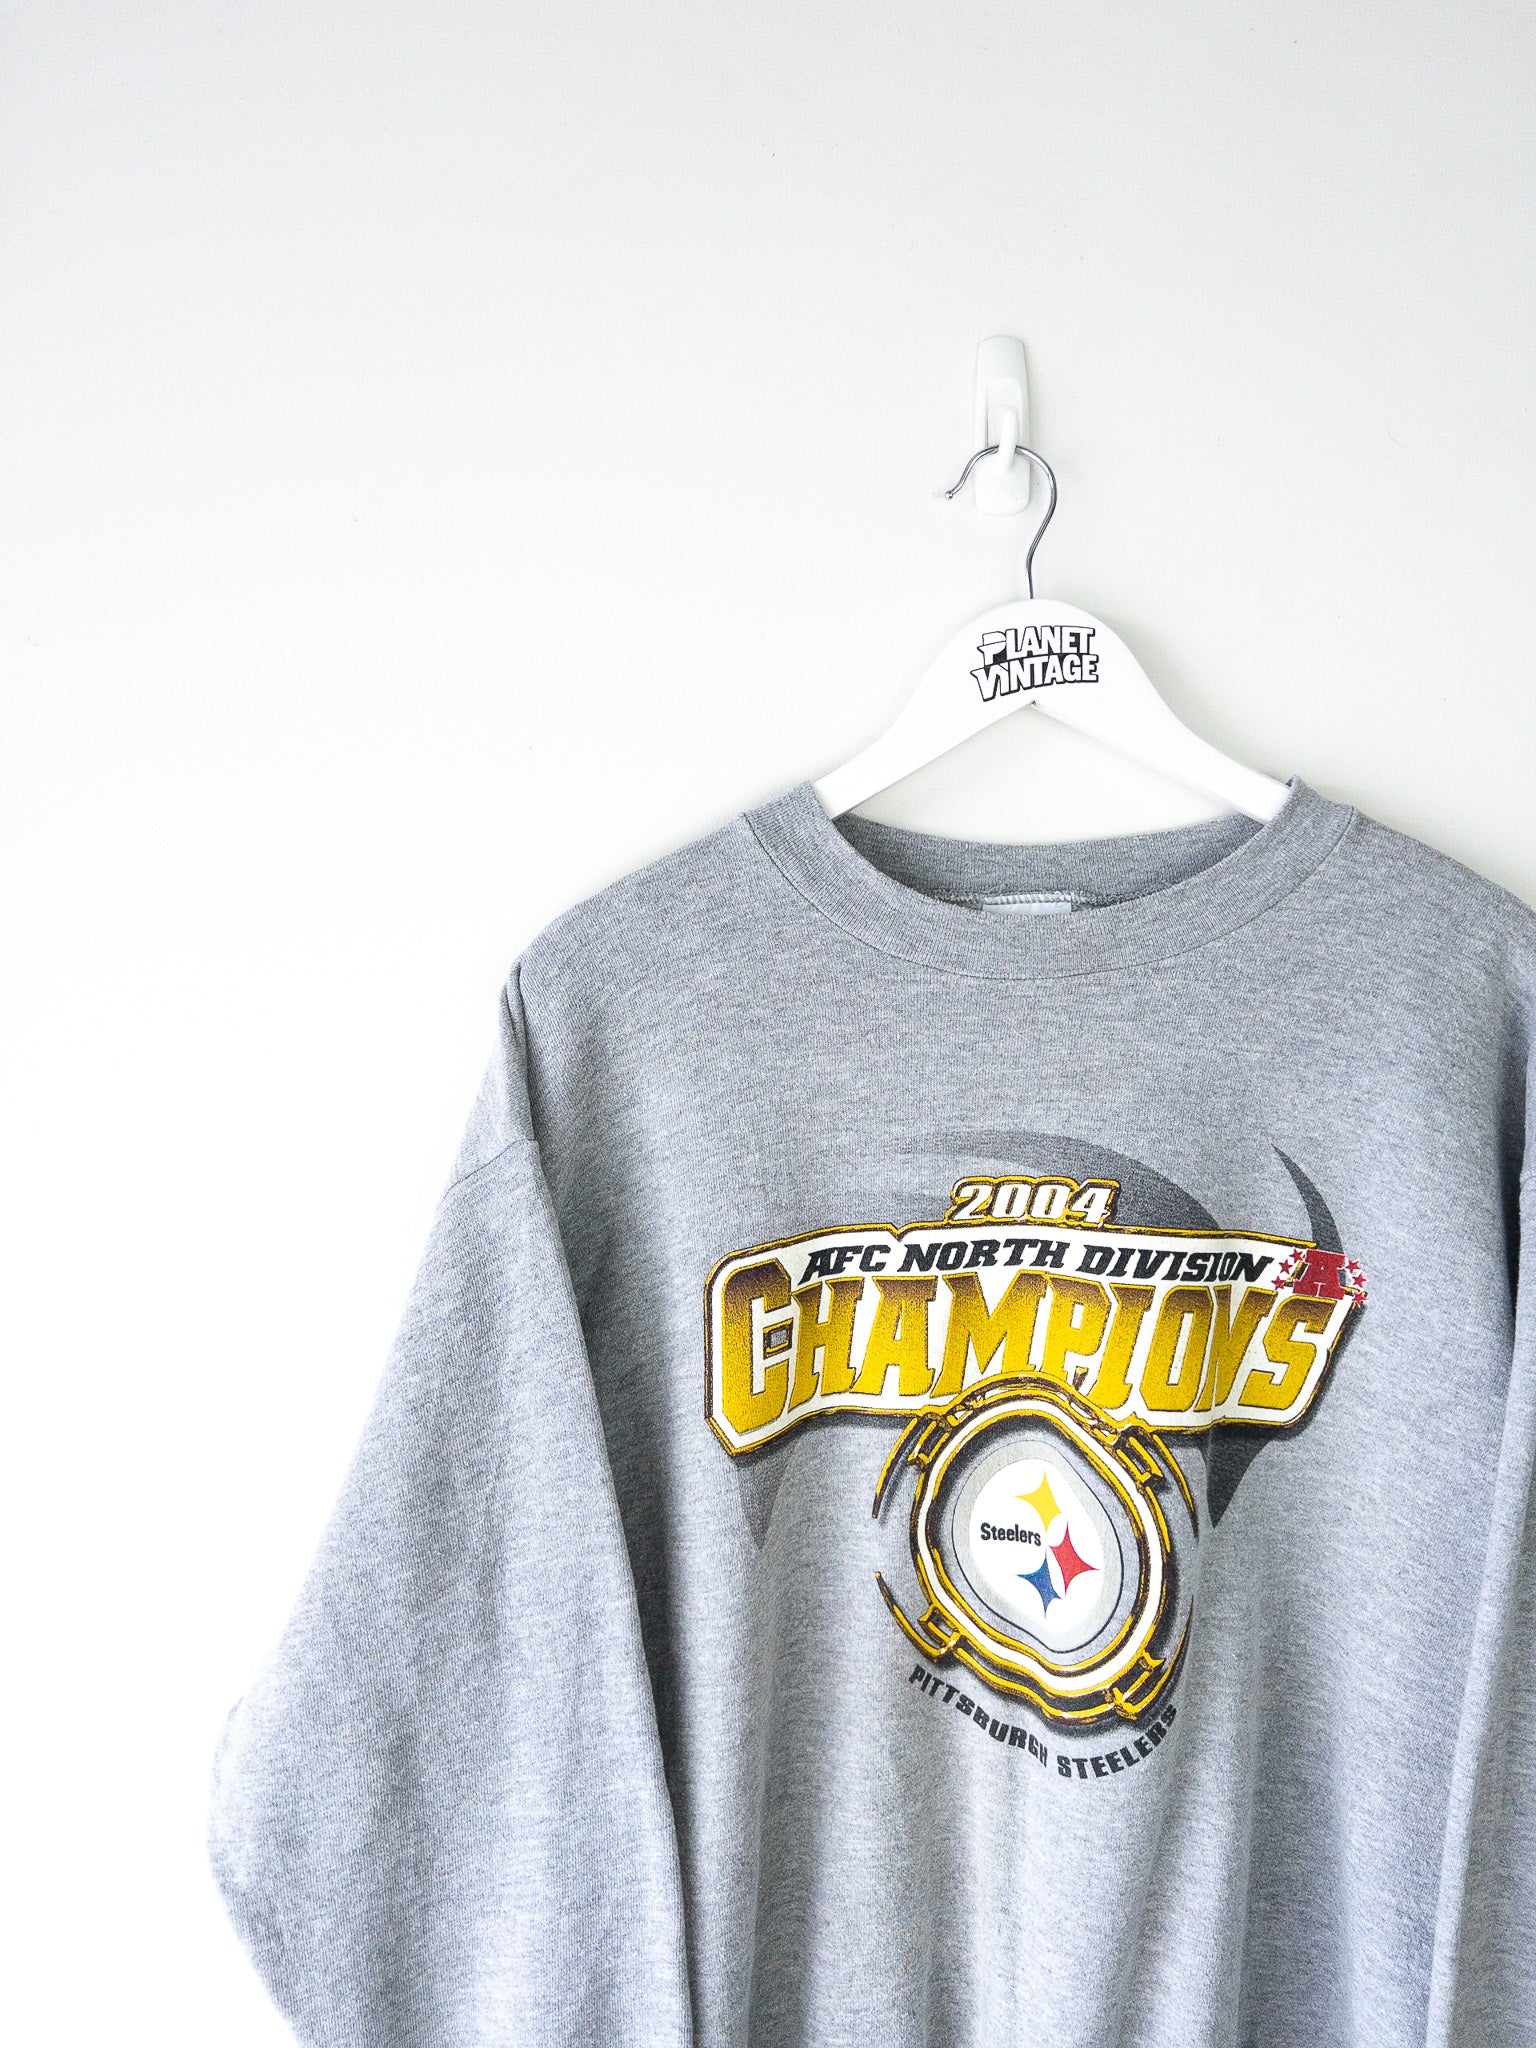 Vintage Pittsburgh Steelers Champions Sweatshirt (L)